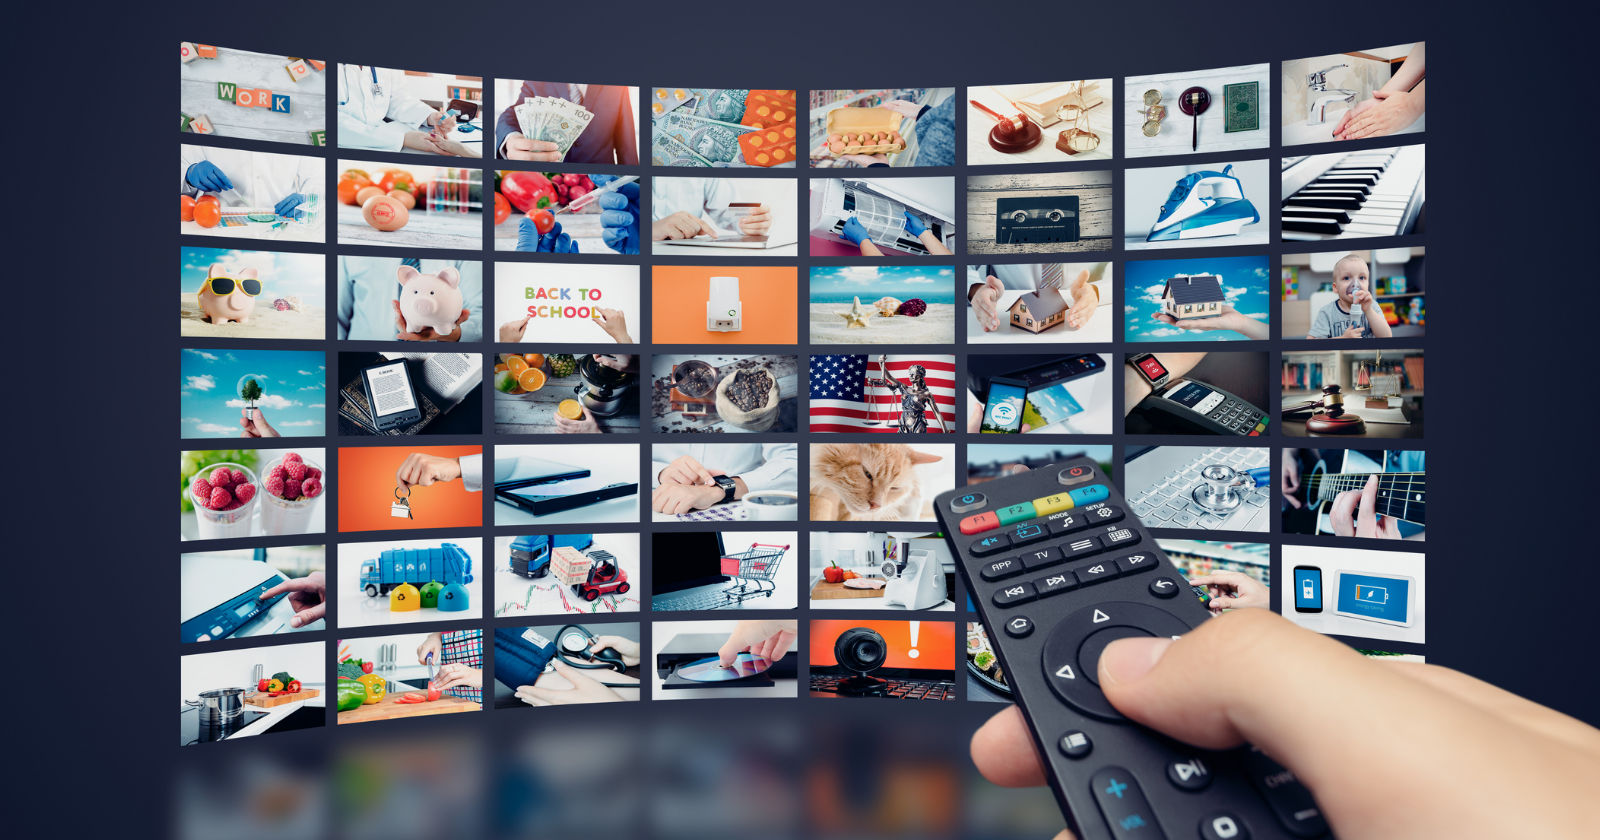 video on demand service providers